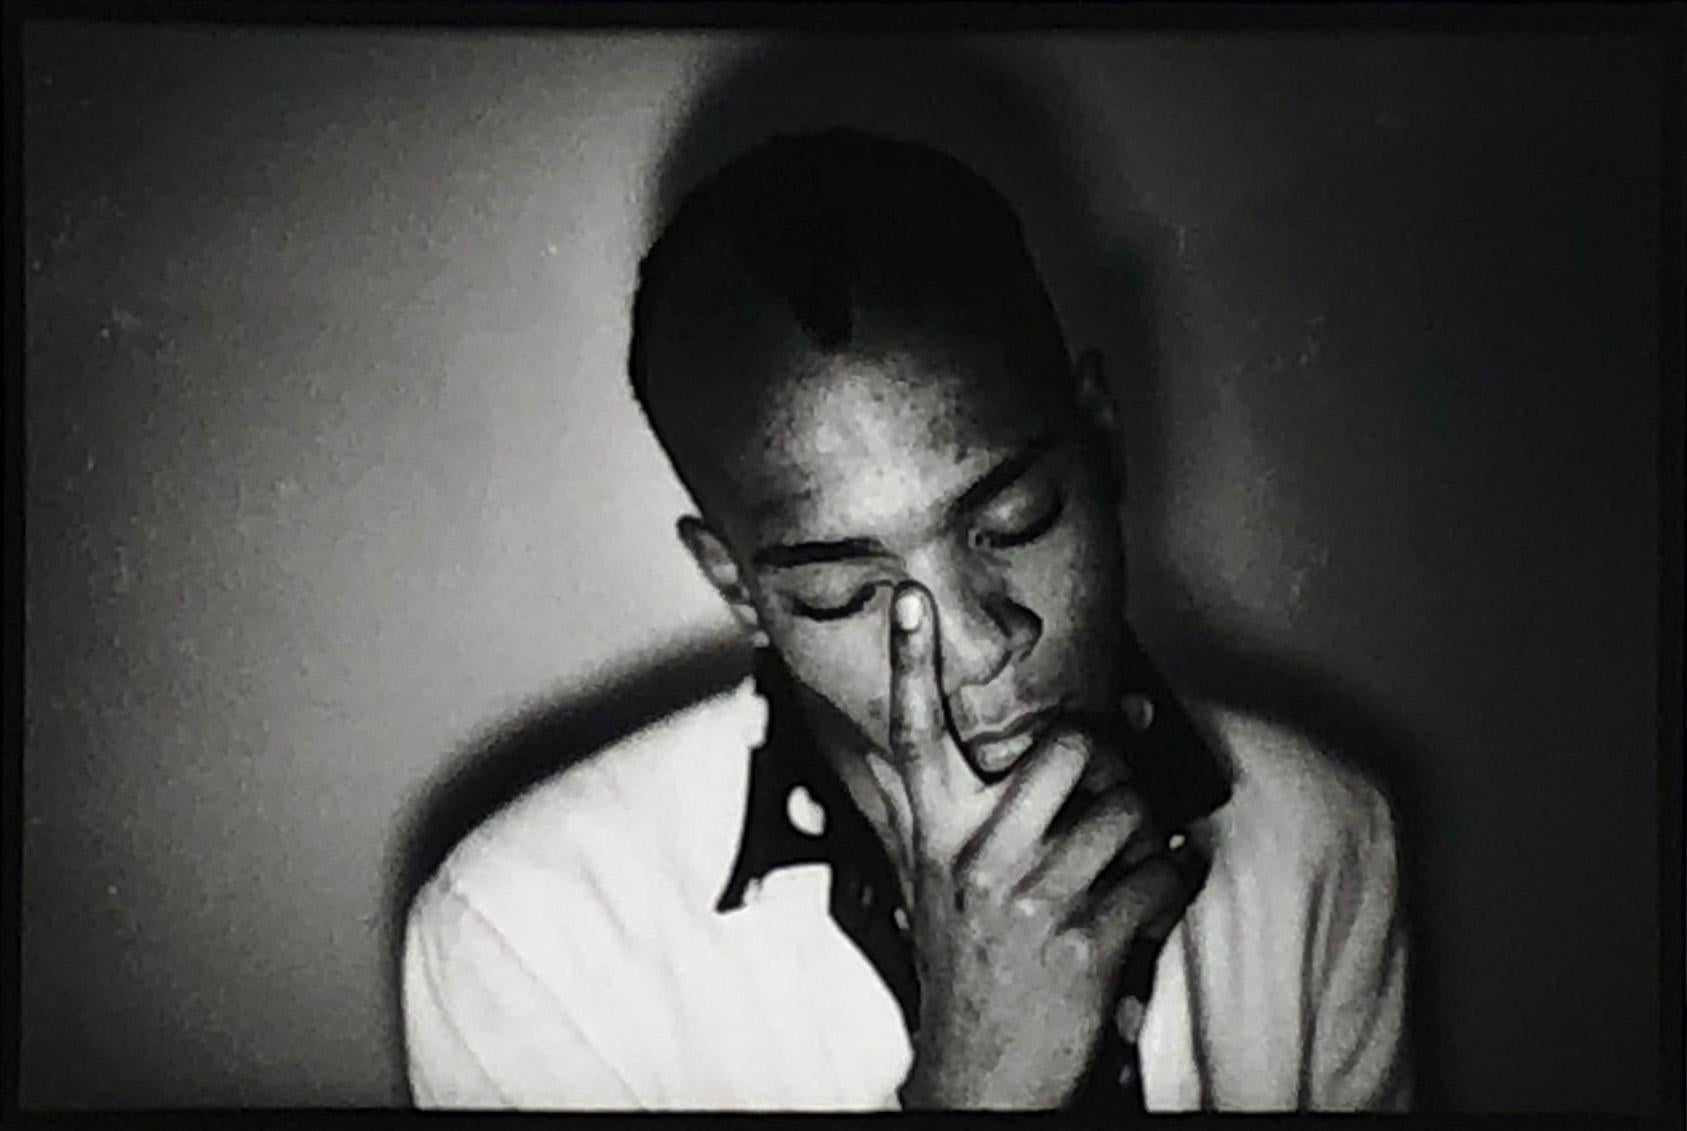 Nicholas Taylor Black and White Photograph - Rare Basquiat photograph 1979 (Samo)